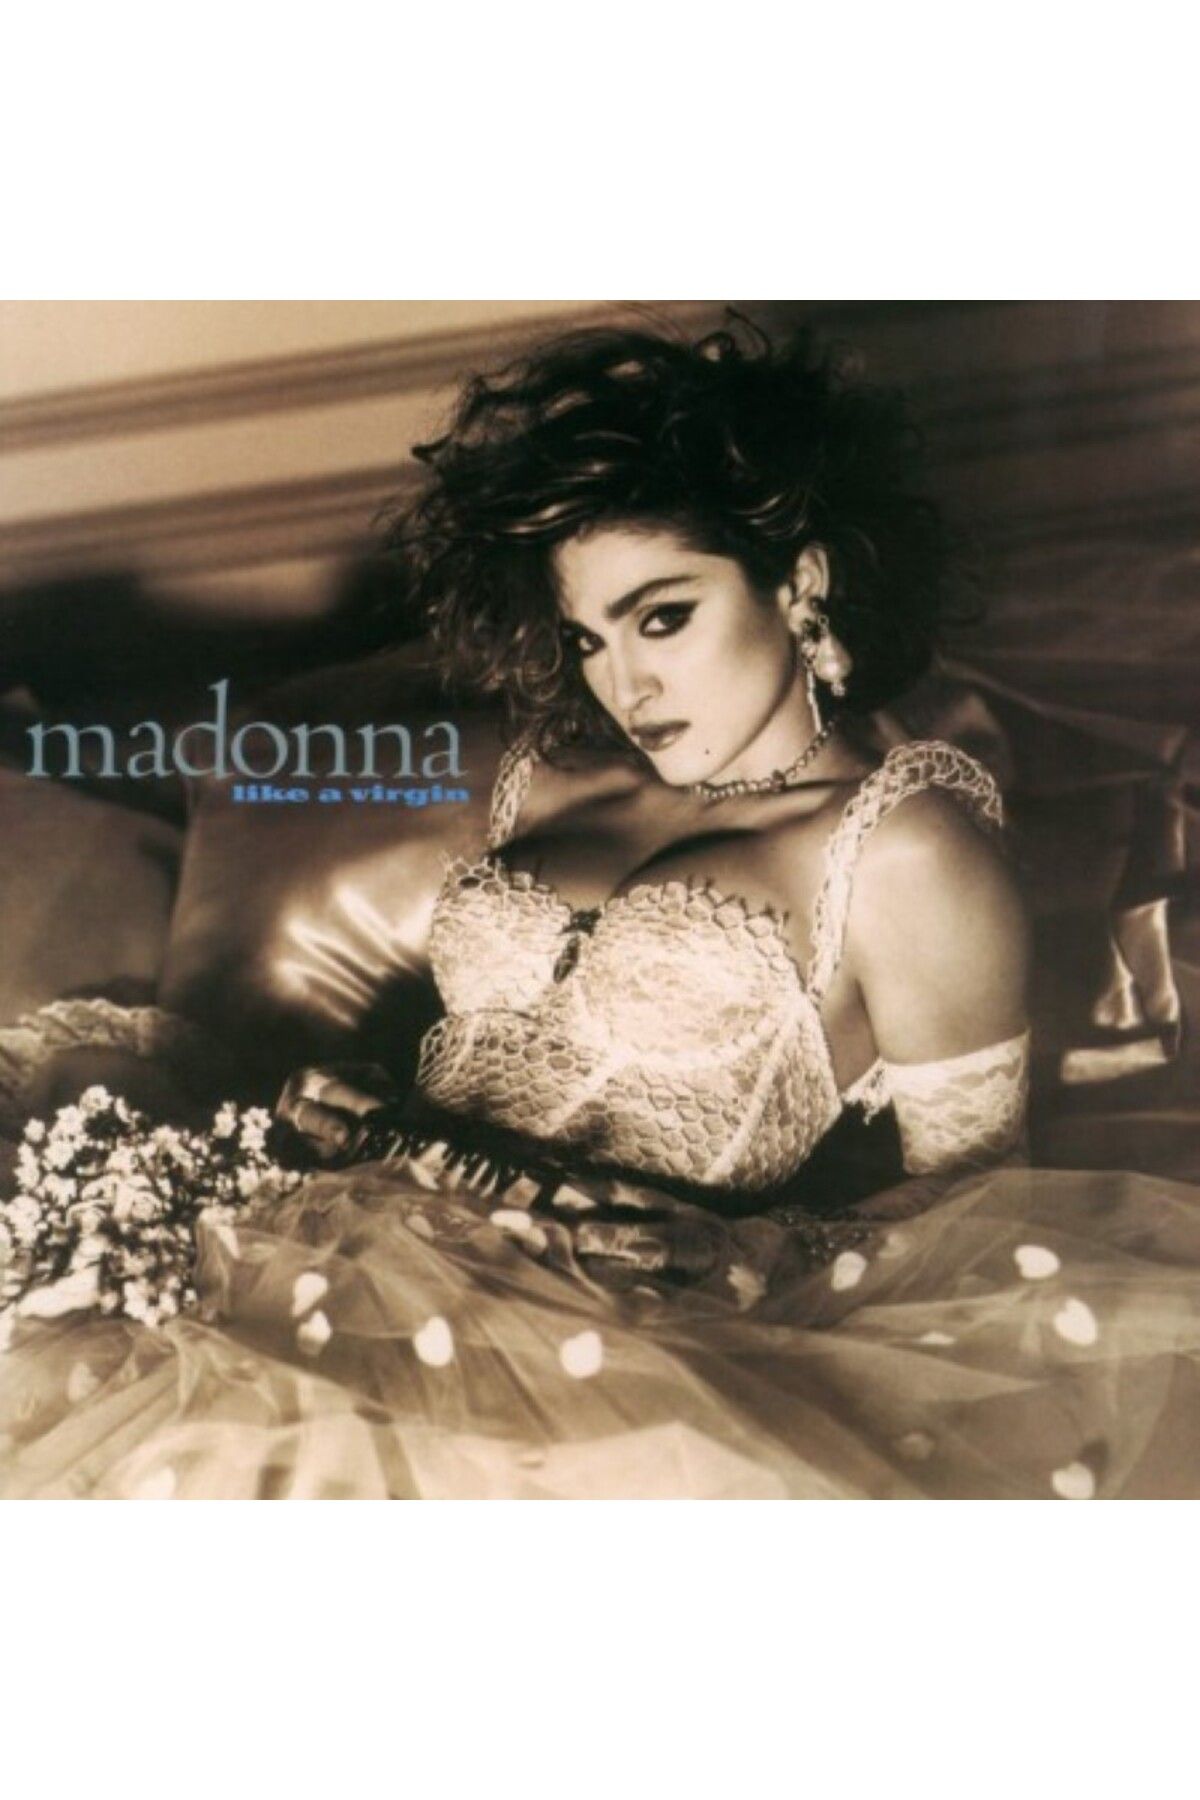 Vinylium Zone Madonna ?– Like A Virgin Vinyl, LP, Album Plak